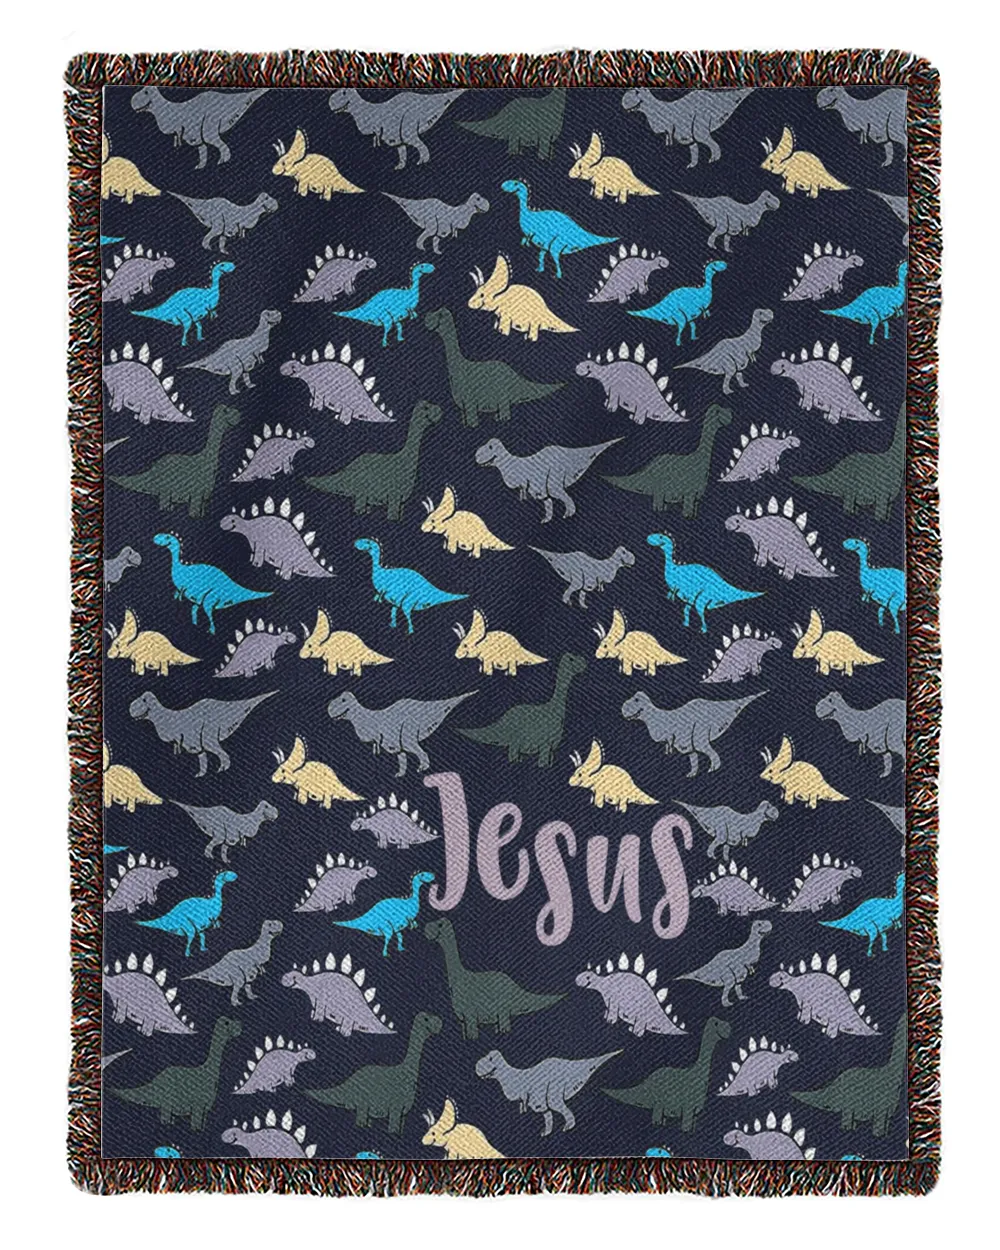 Dinosaurus Fleece Blanket, Dino Sherpa Blanket, Fleece Blanket For Baby, Blanket Gift